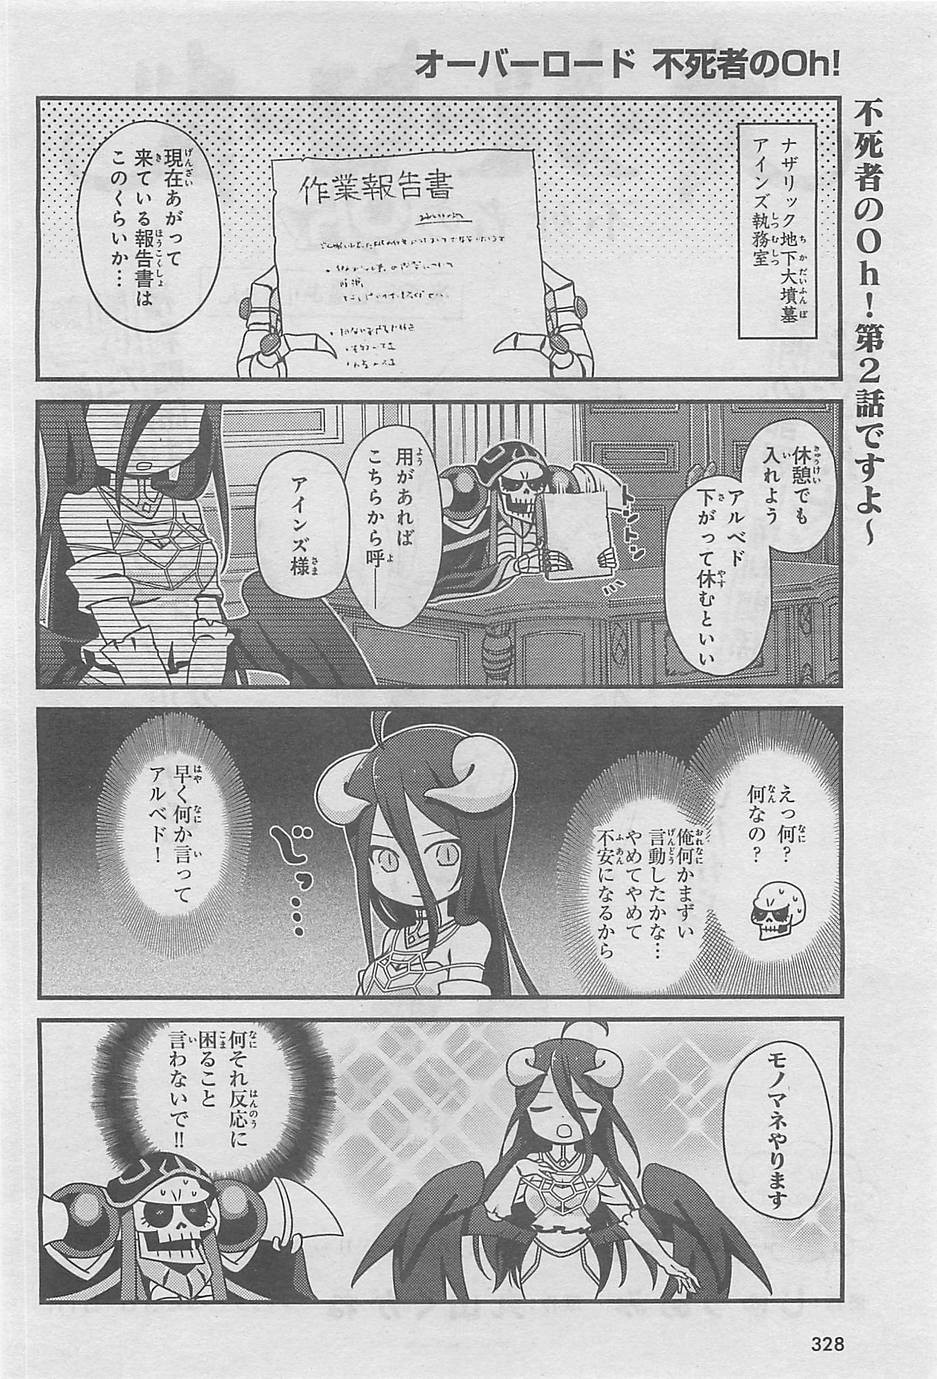 Overlord-Fushisha-no-Oh - Chapter 02 - Page 2